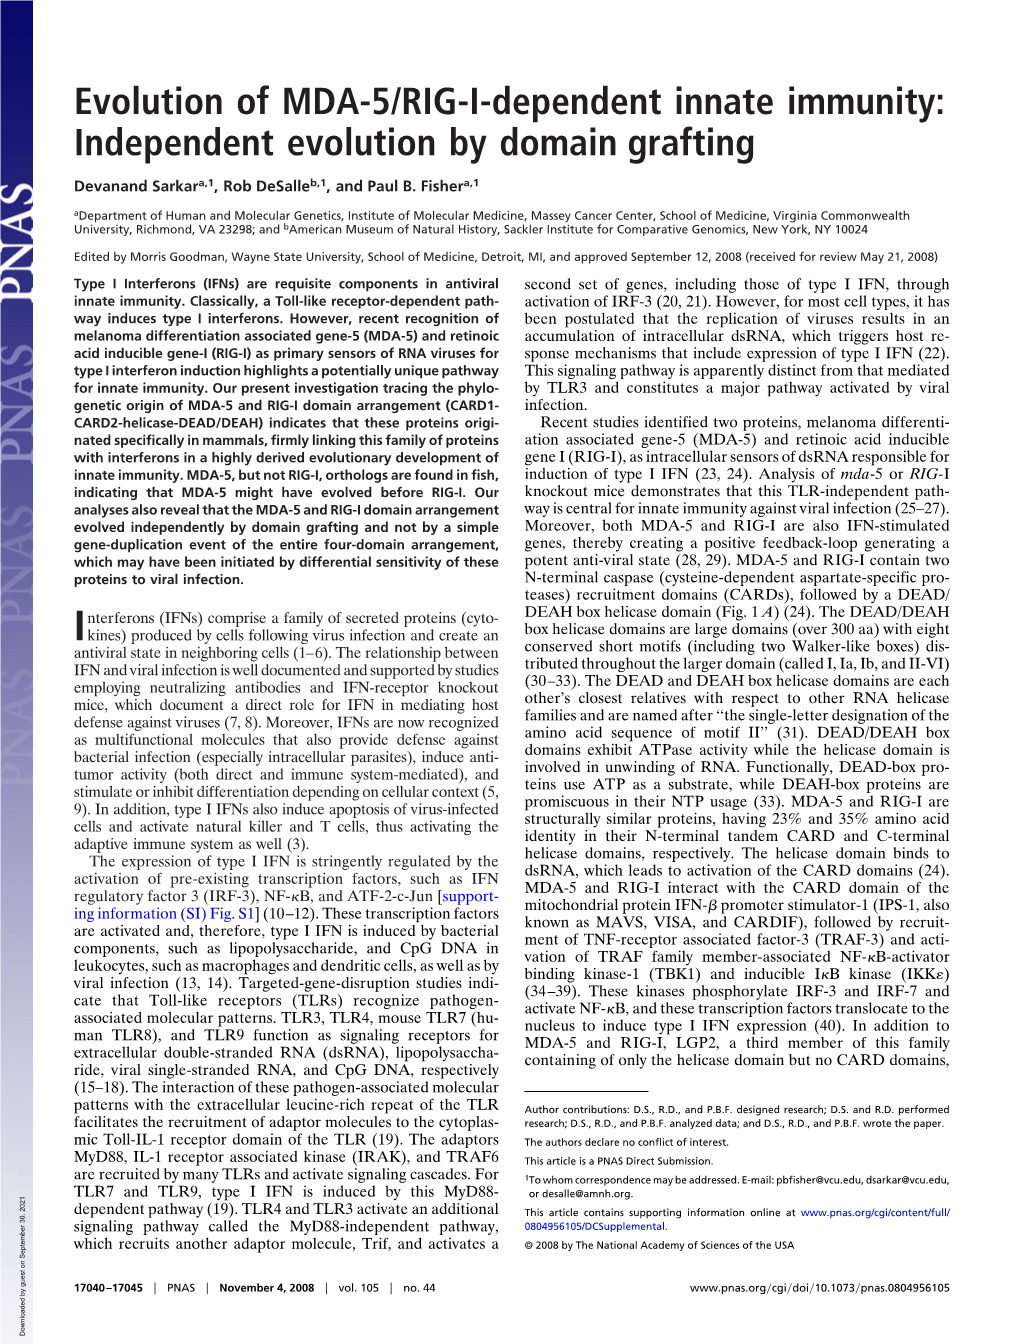 Evolution of MDA-5/RIG-I-Dependent Innate Immunity: Independent Evolution by Domain Grafting